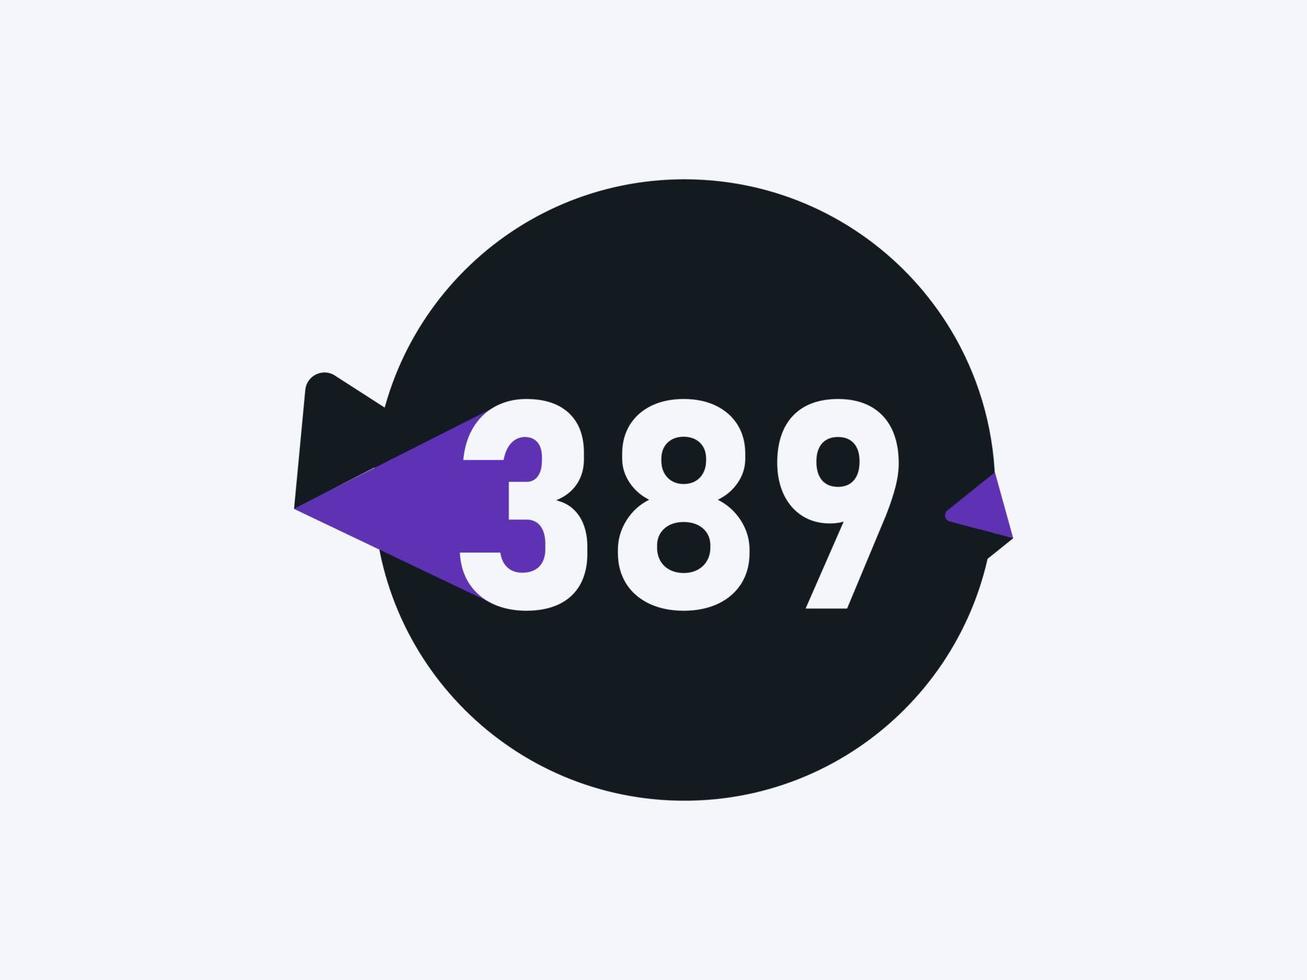 389 Number logo icon design vector image. Number logo icon design vector image